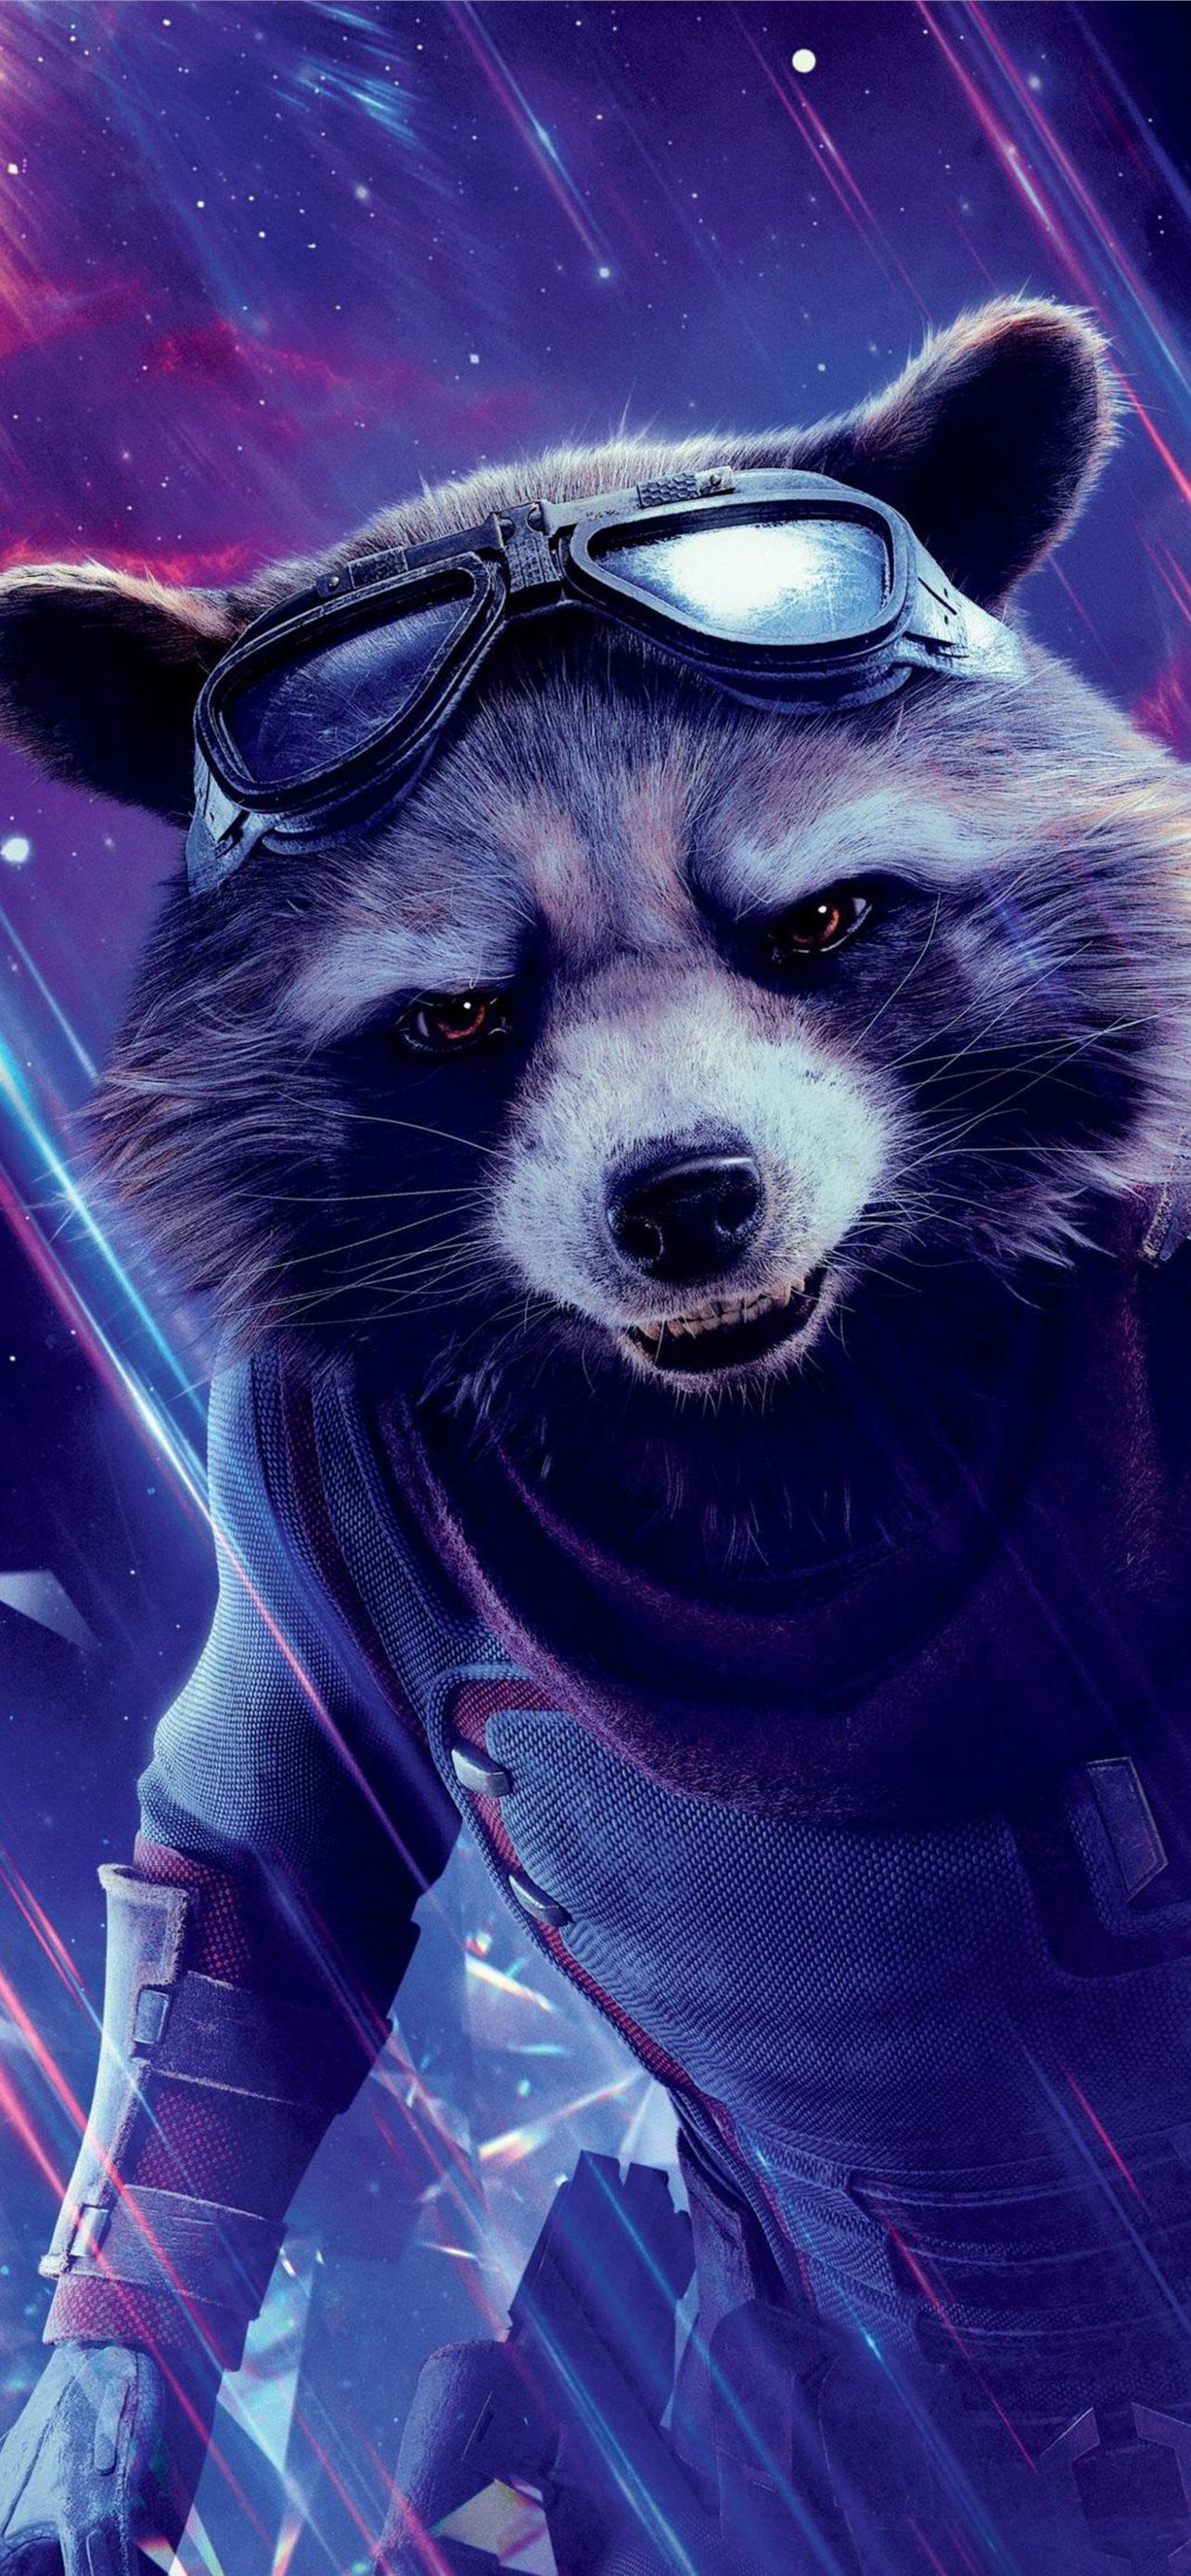 Rocket Raccoon In Avengers Endgame Sony